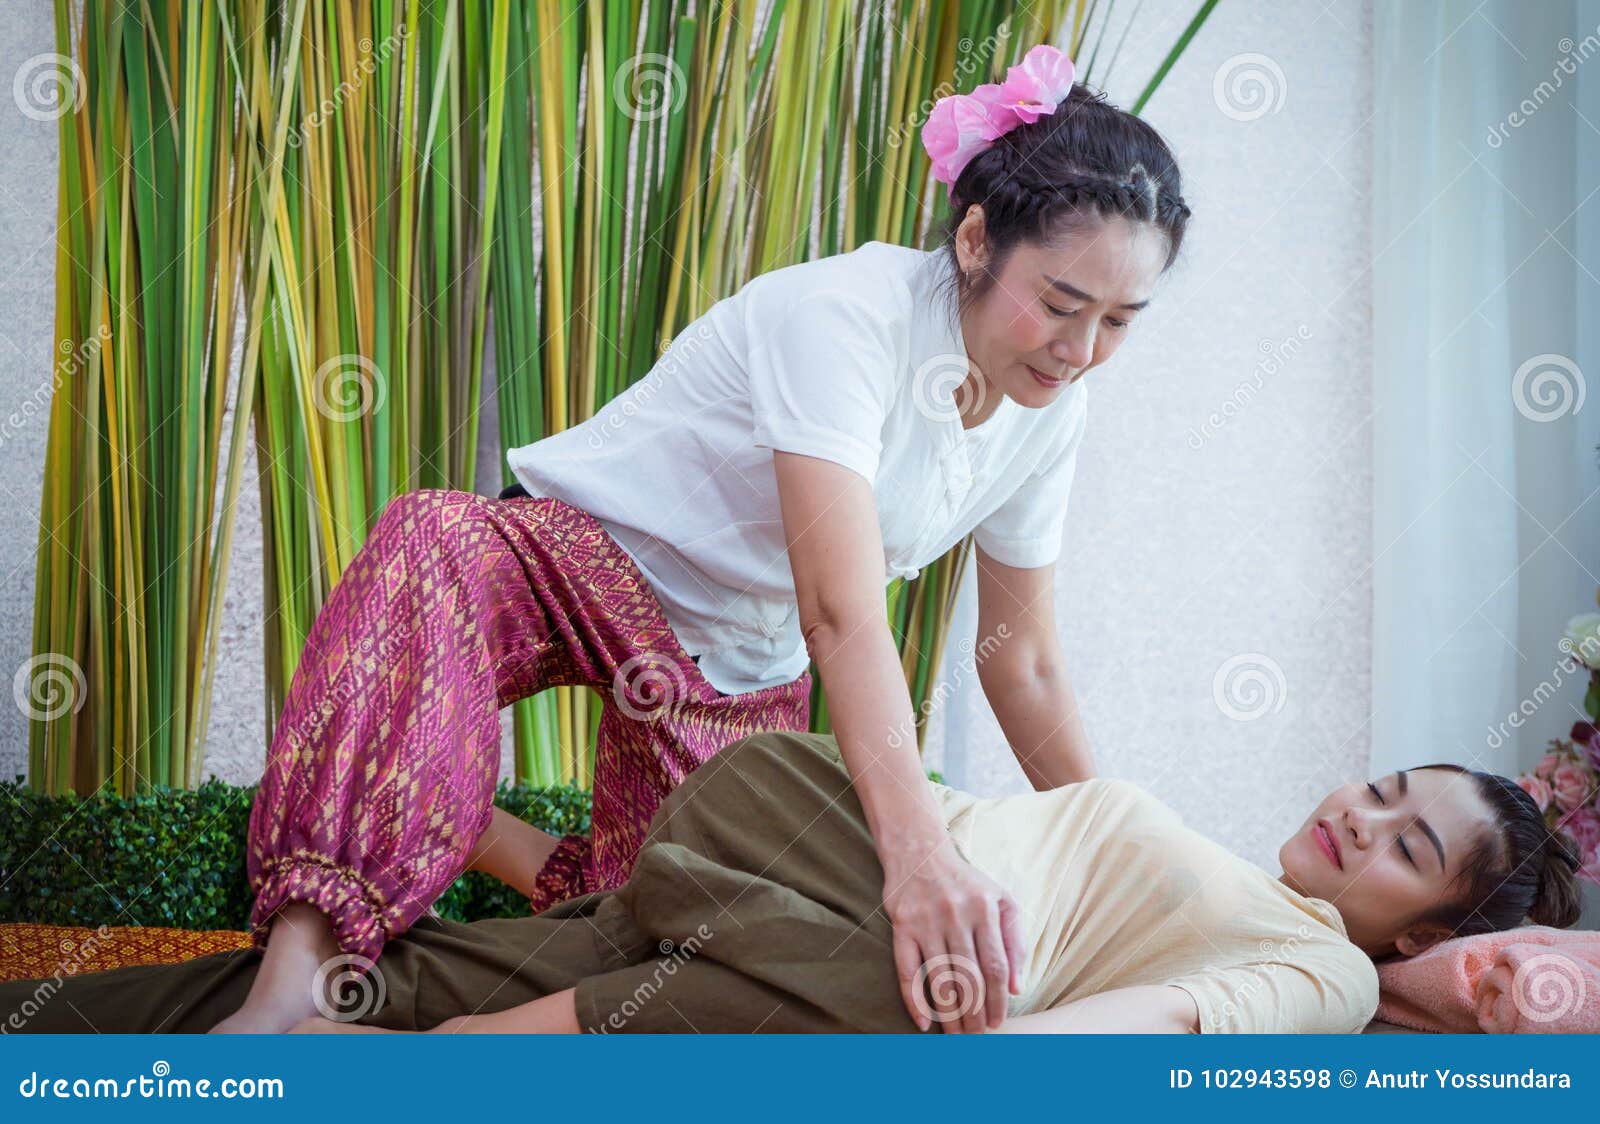 celeste mcnamee recommends Asian Lesbian Oil Massage